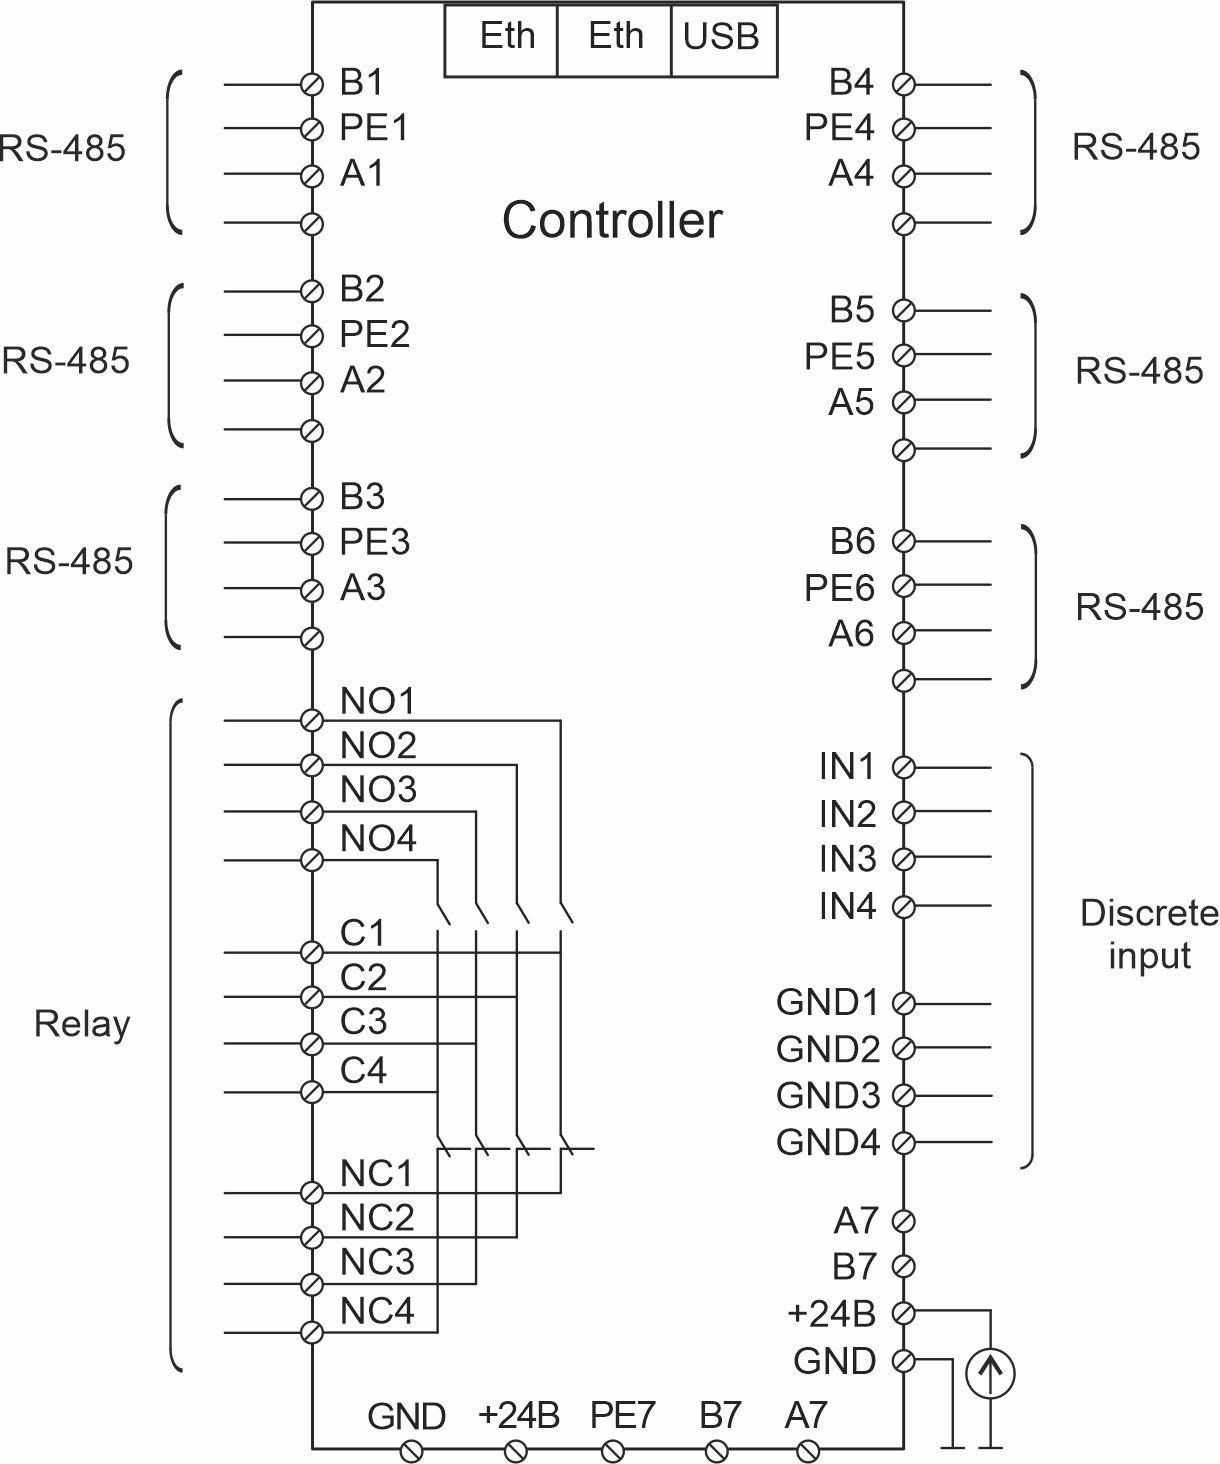 Connection schemes of DVA vibration sensors and TIK-PLC 896 controller